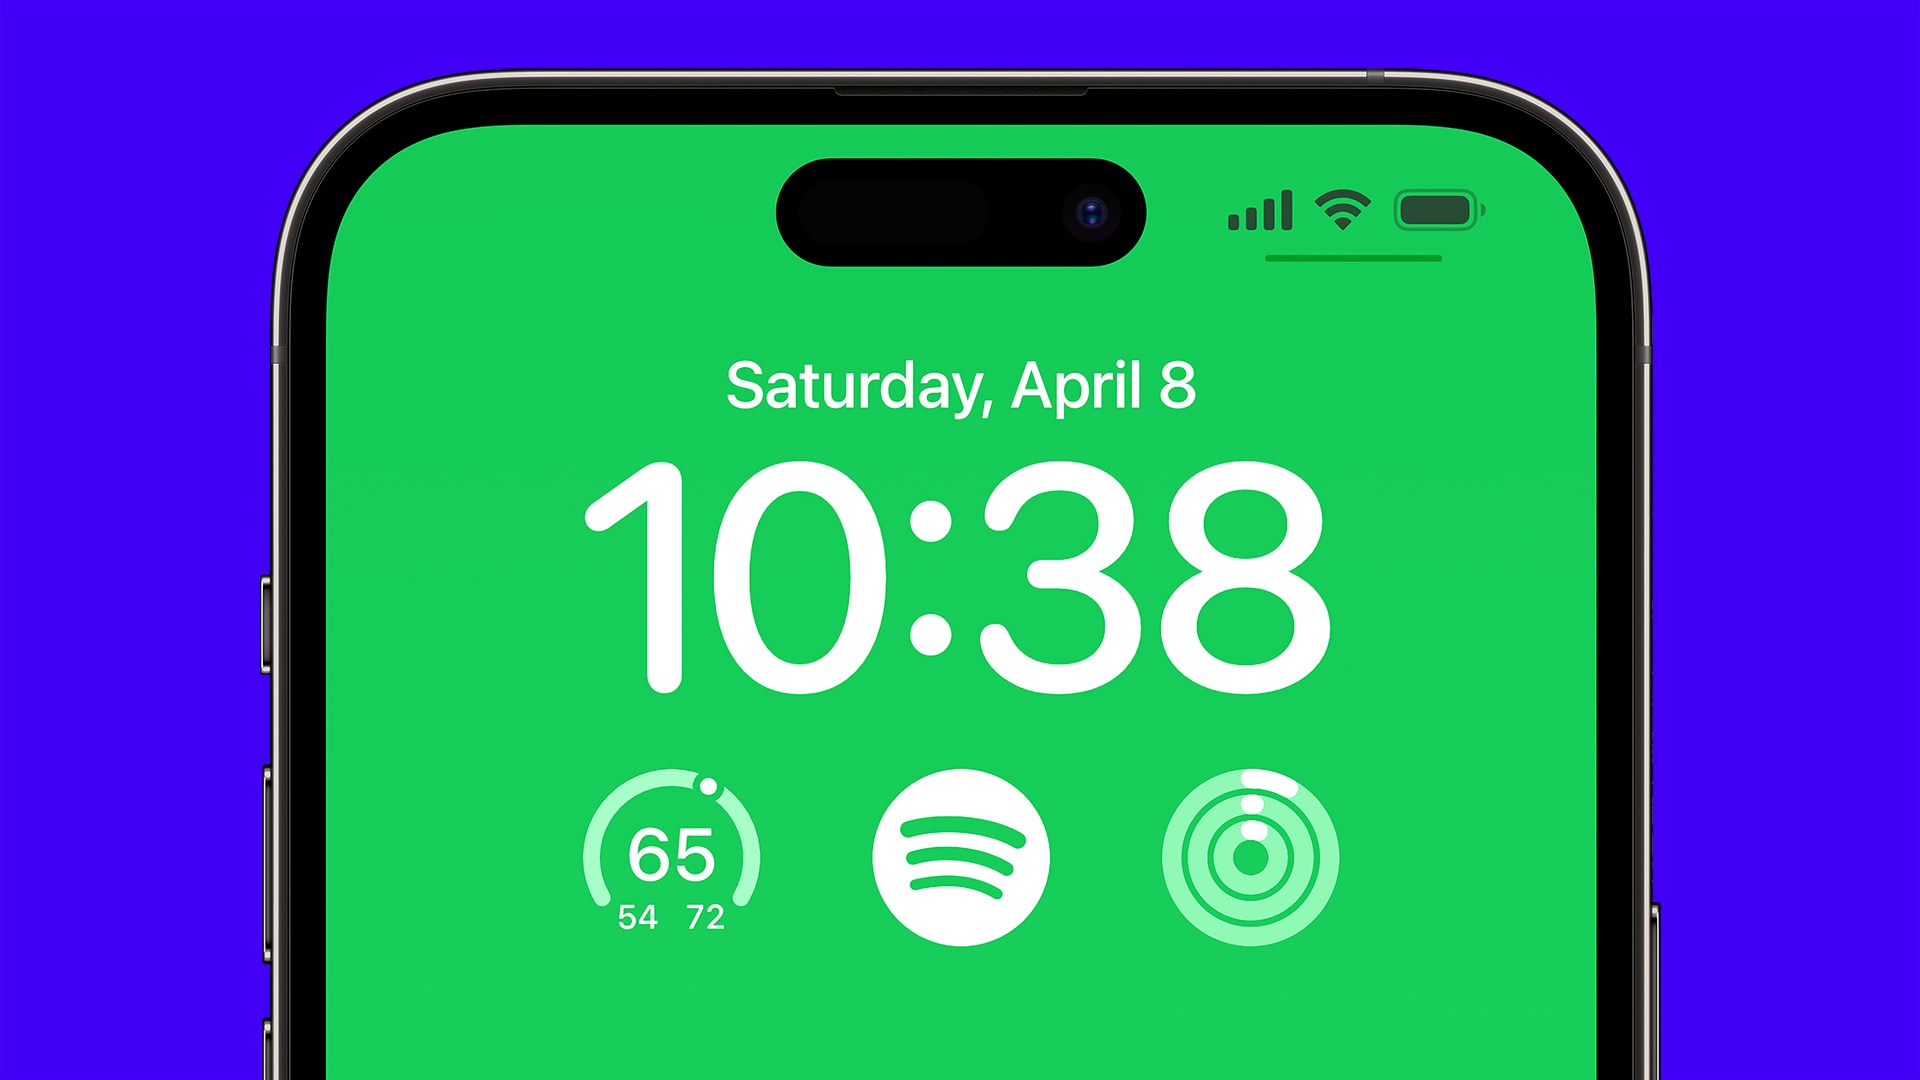 A Spotify widget on the iPhone's lock screen